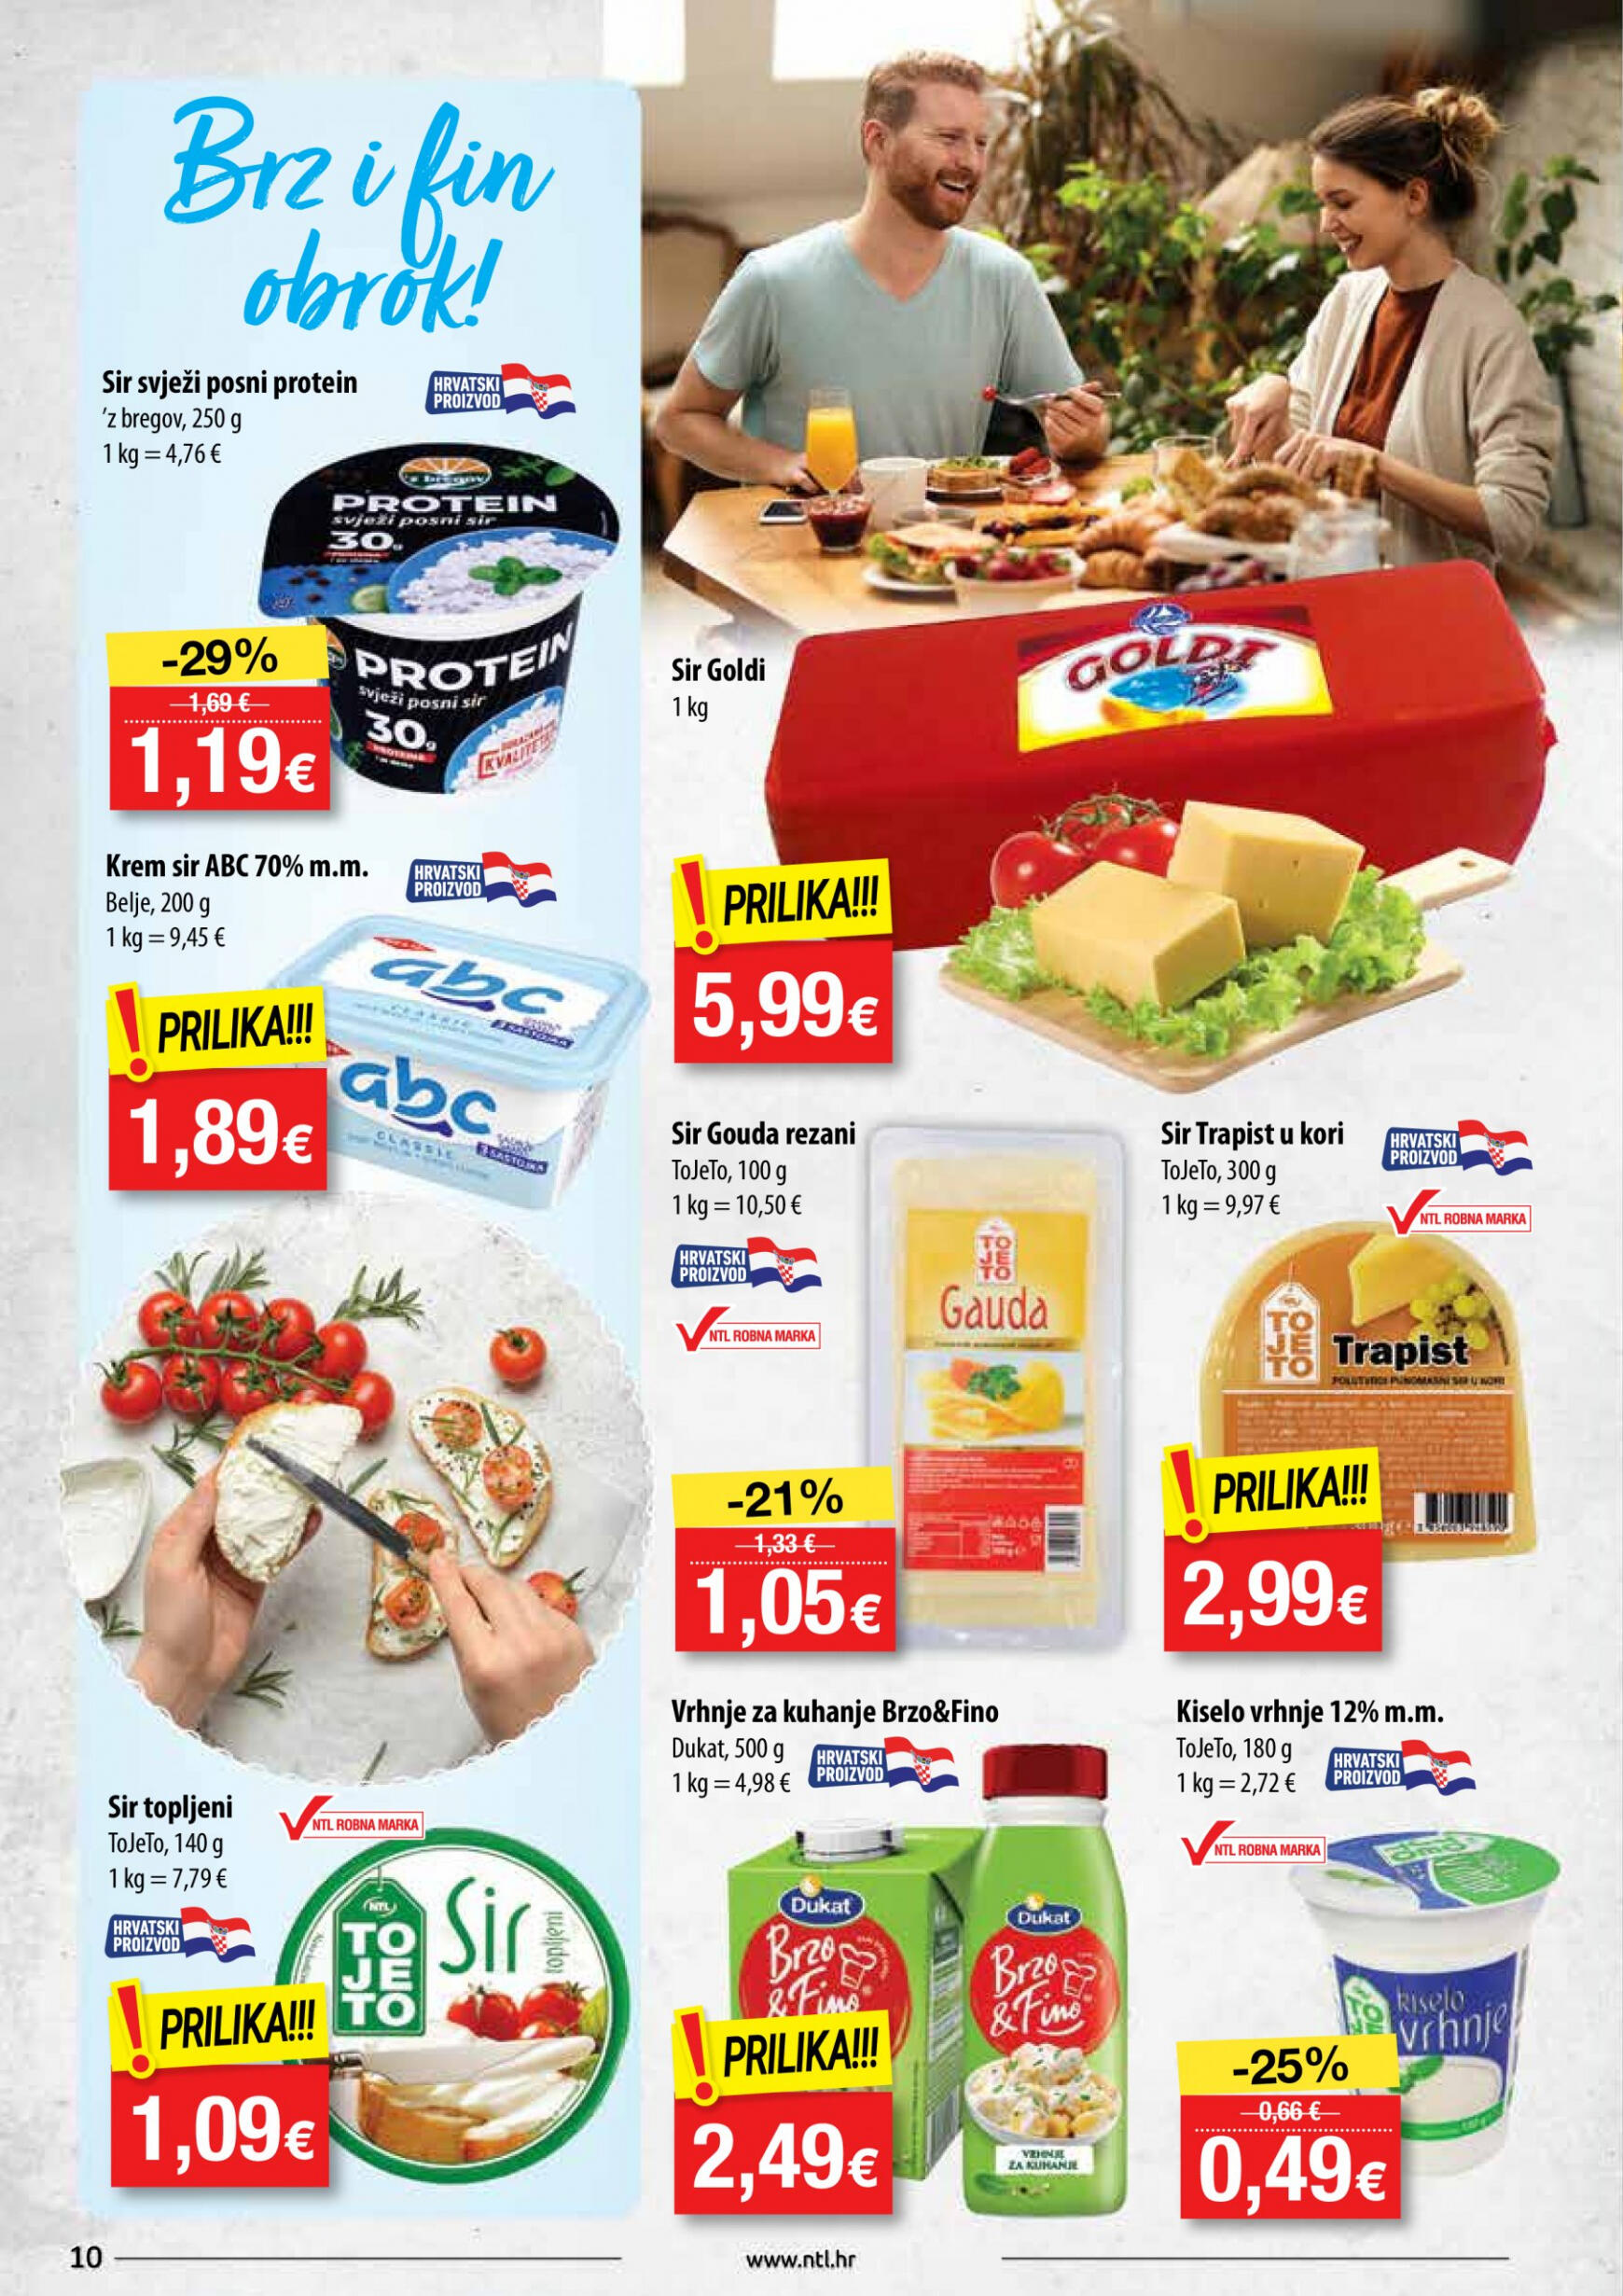 ntl - Novi katalog NTL - Supermarketi Soblinec, Krapina, Duga Resa 10.04. - 16.04. - page: 10